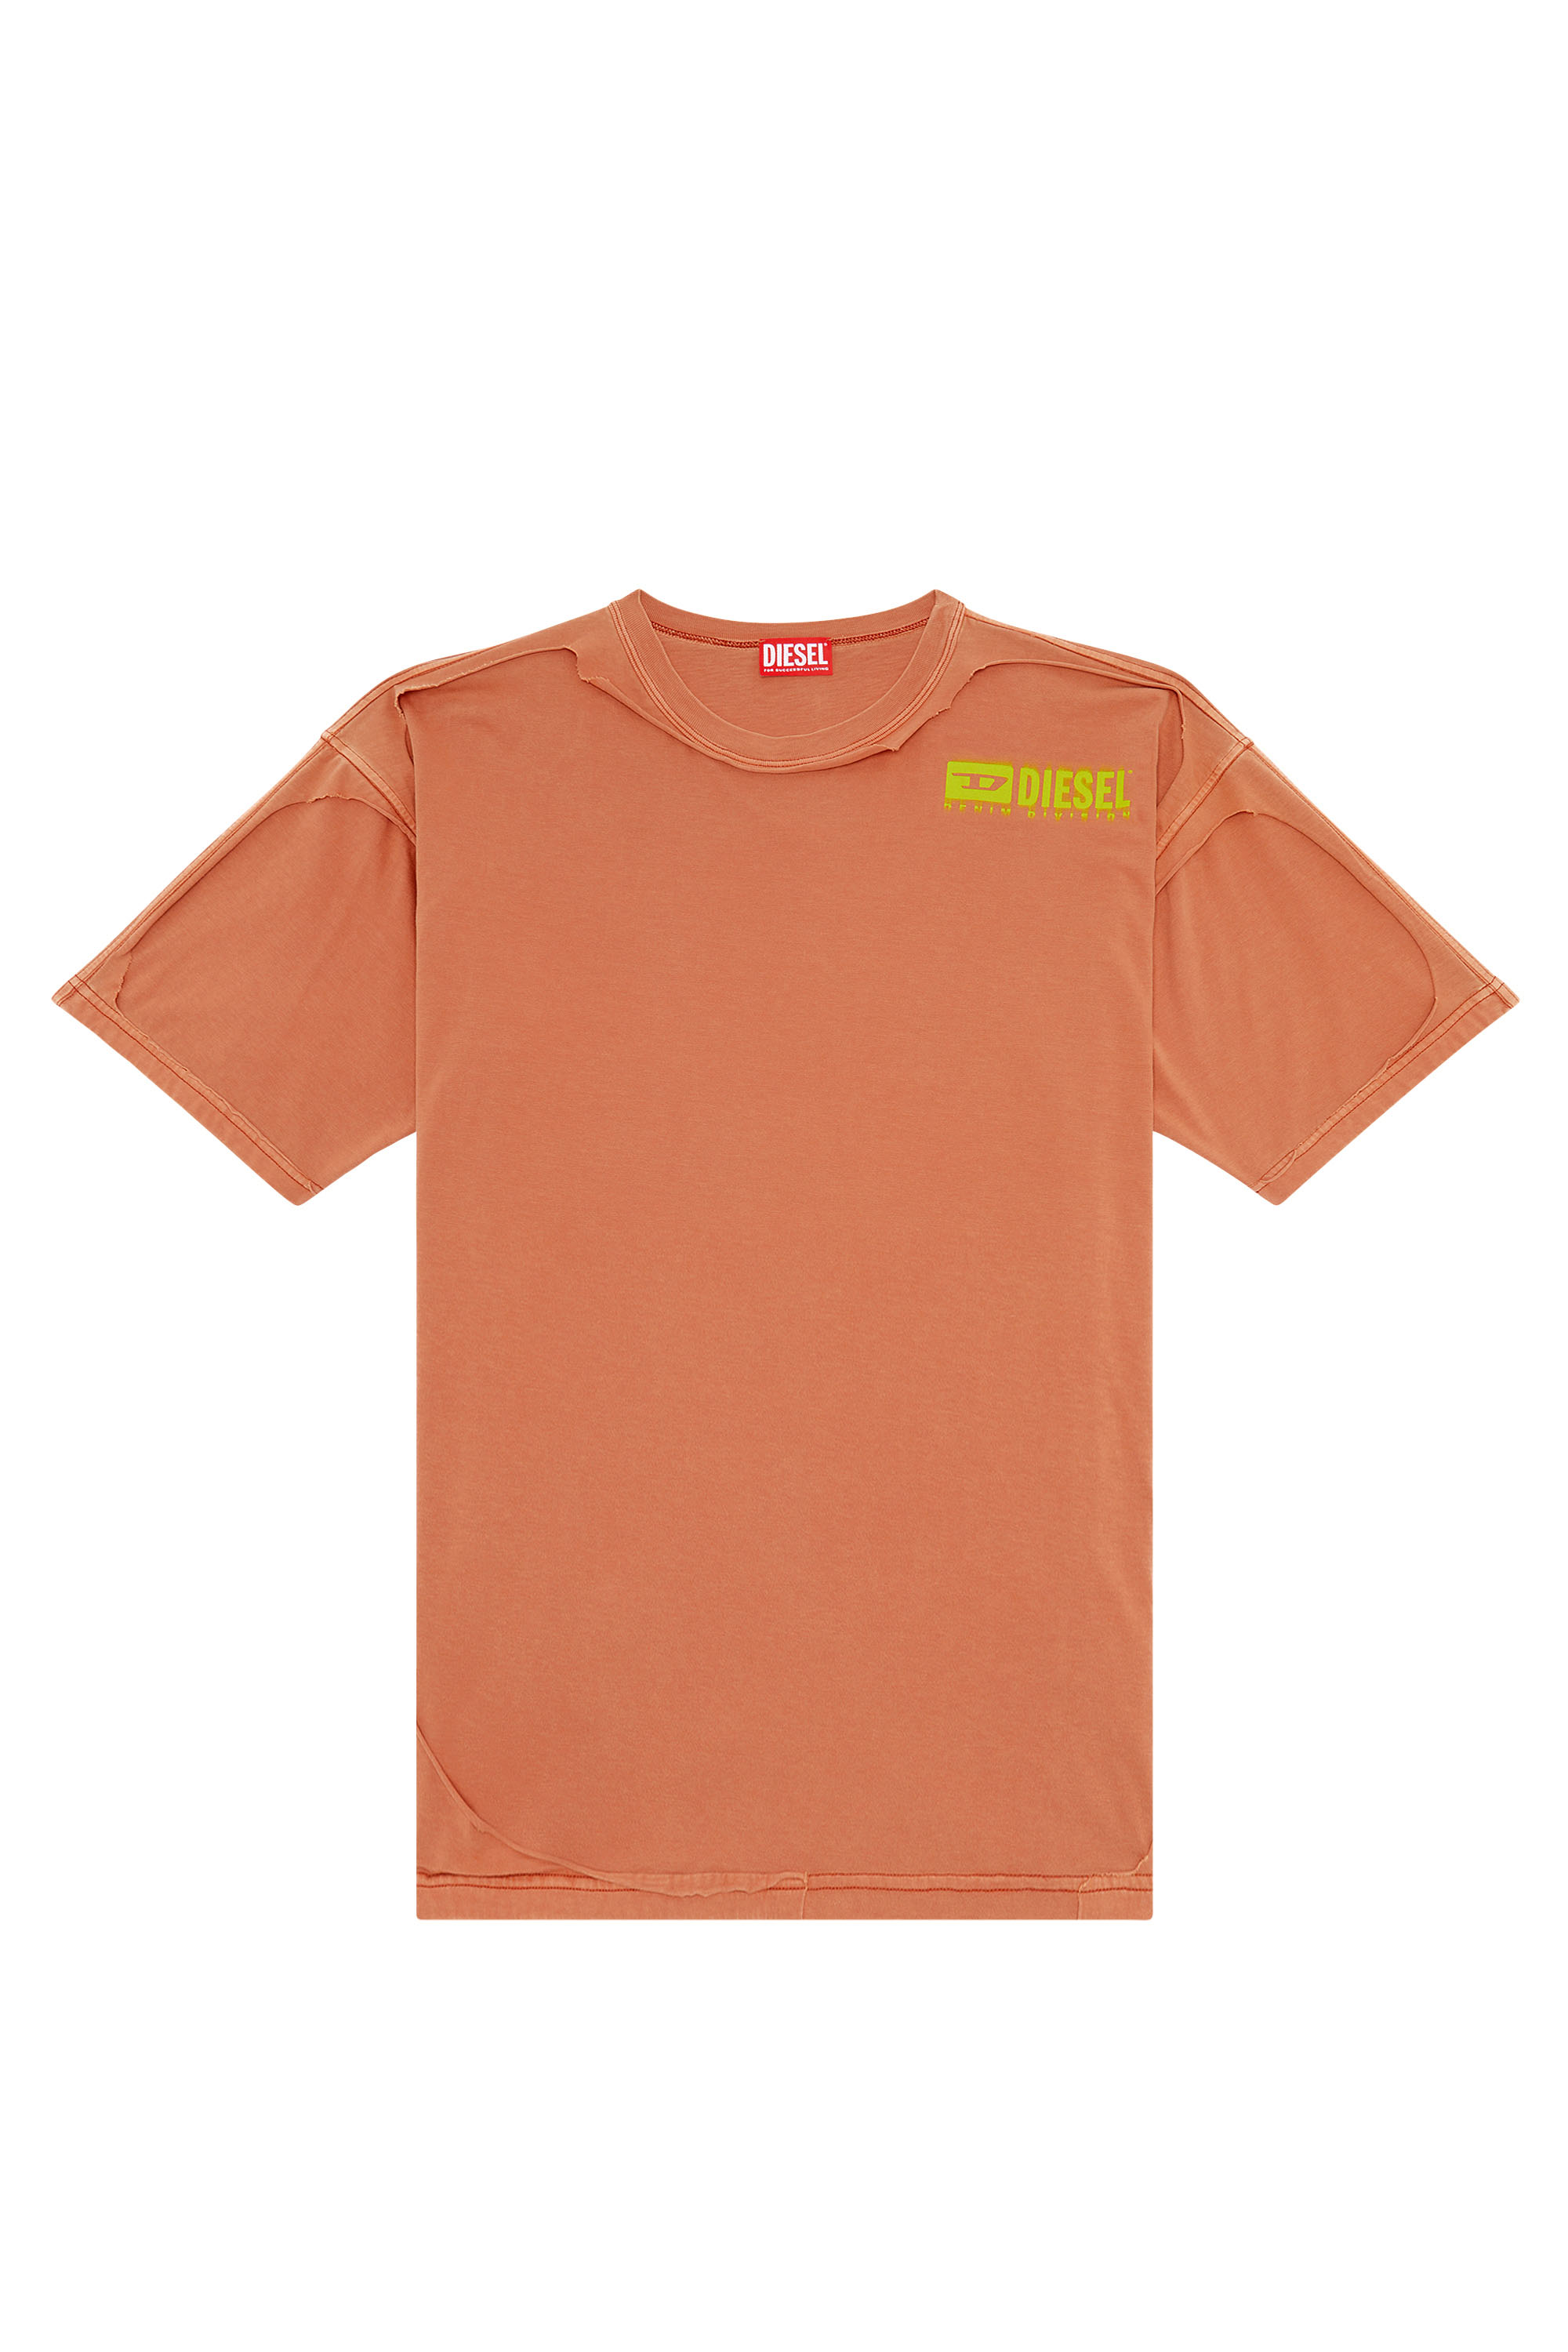 Diesel - T-BOXT-DBL, Homme T-shirt avec effet peel-off destroy in Orange - Image 4